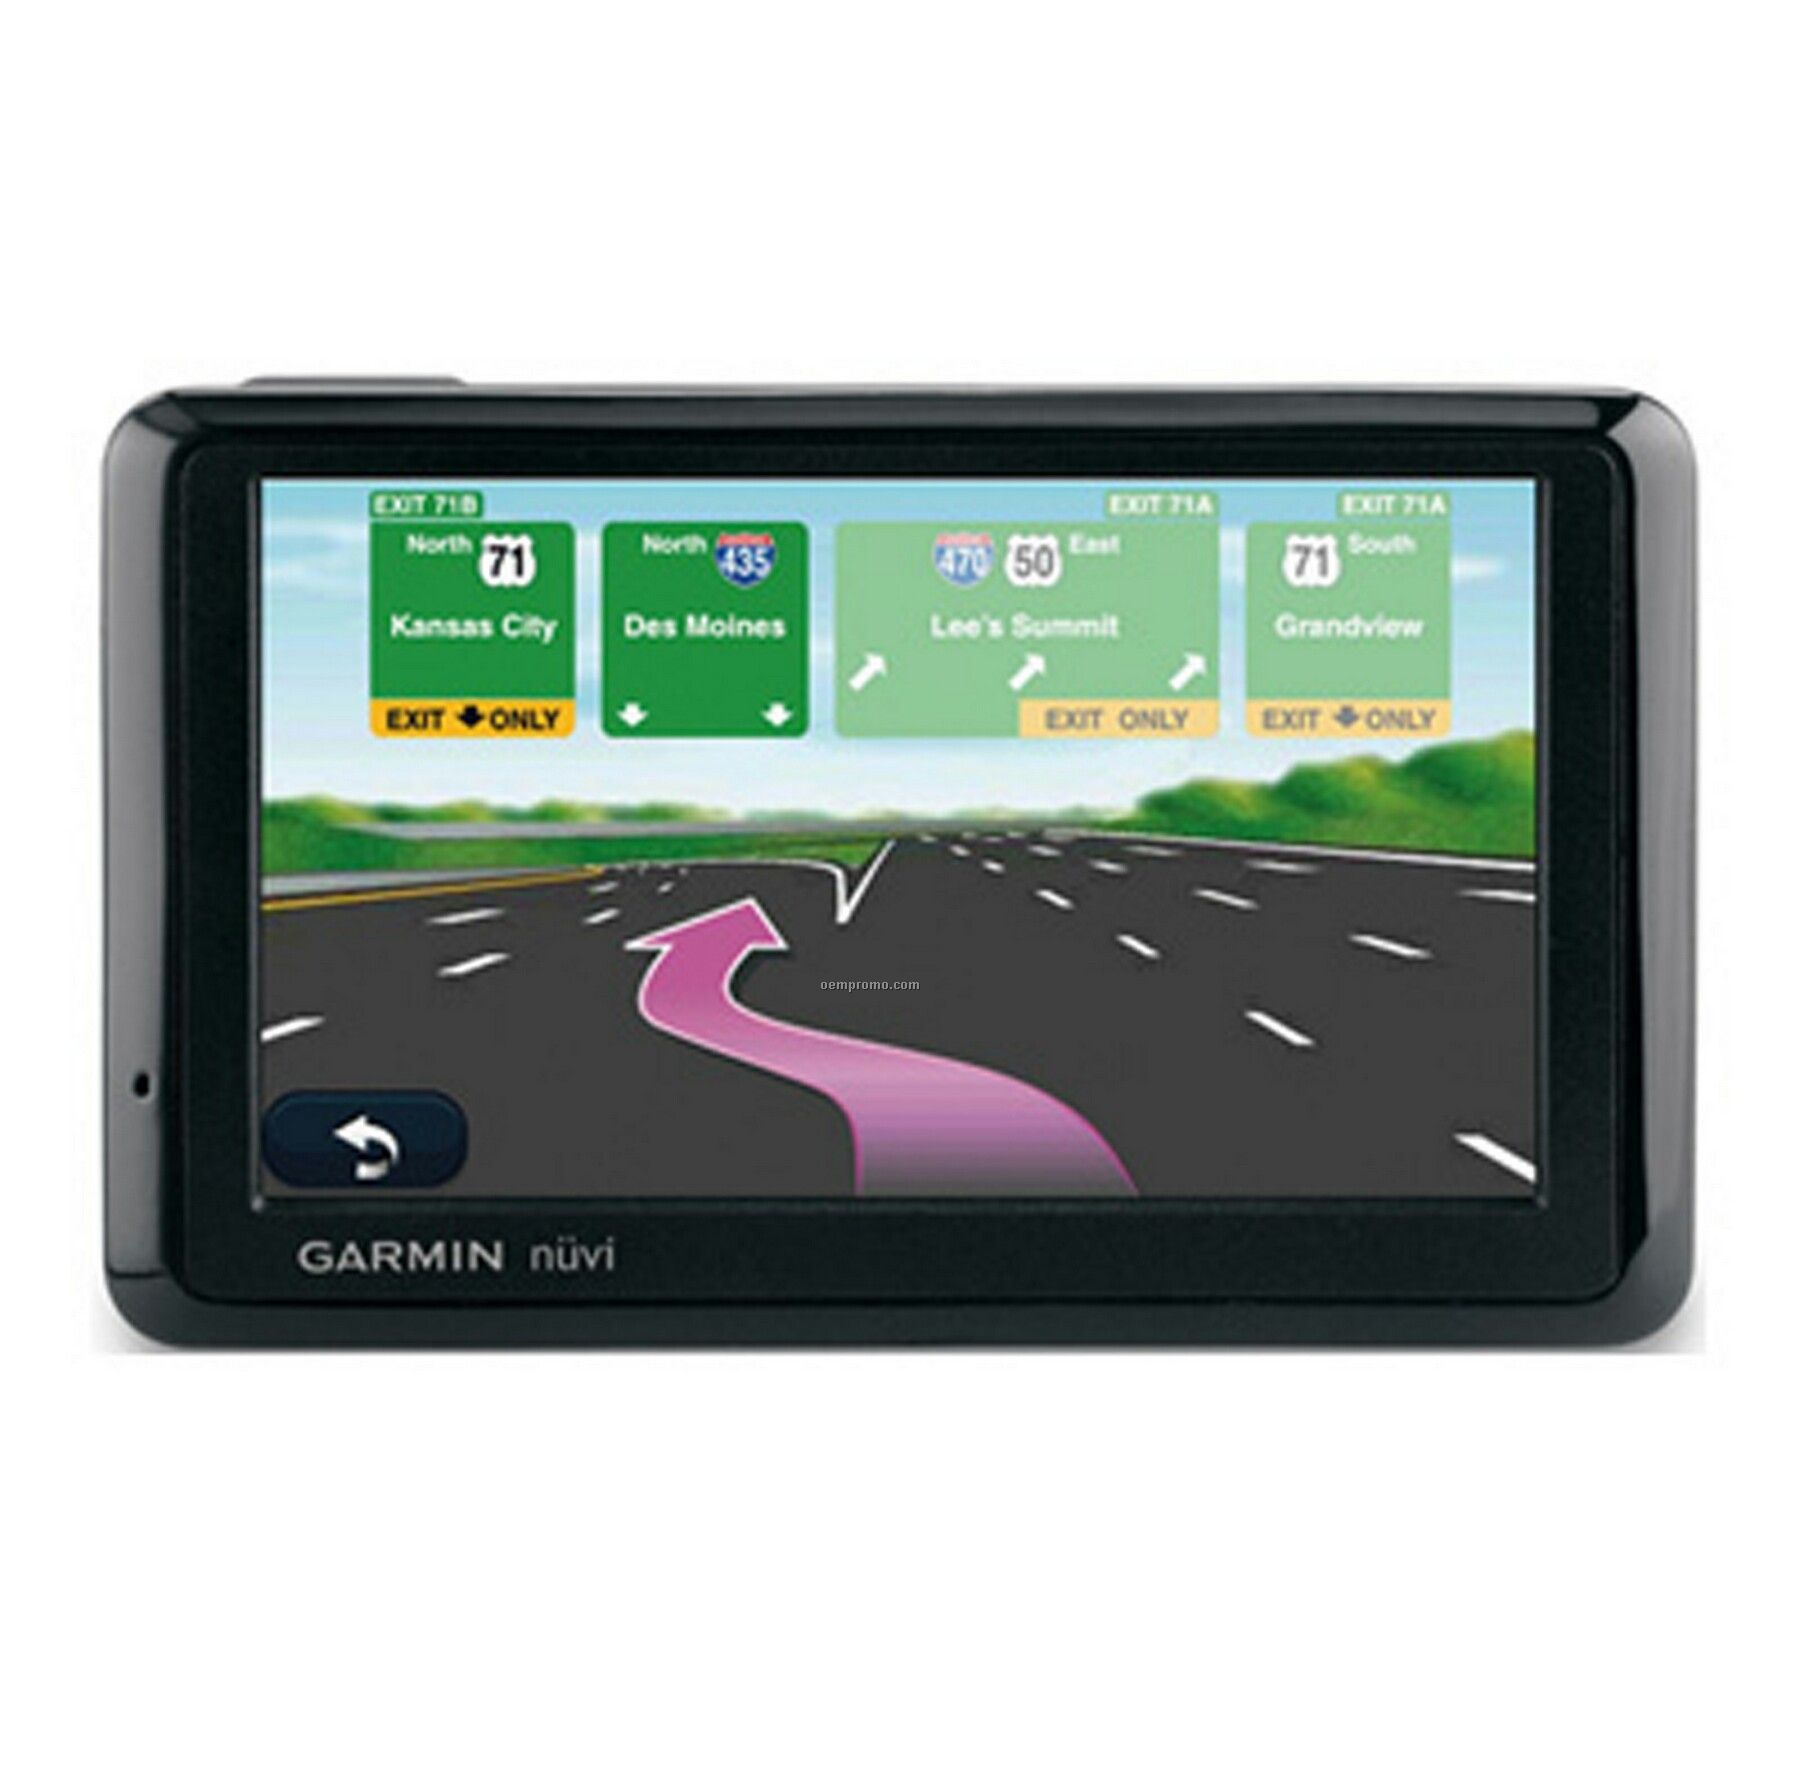 Garmin Nuvi 1390t Gps Vehicle Navigation System Bluetooth Enable